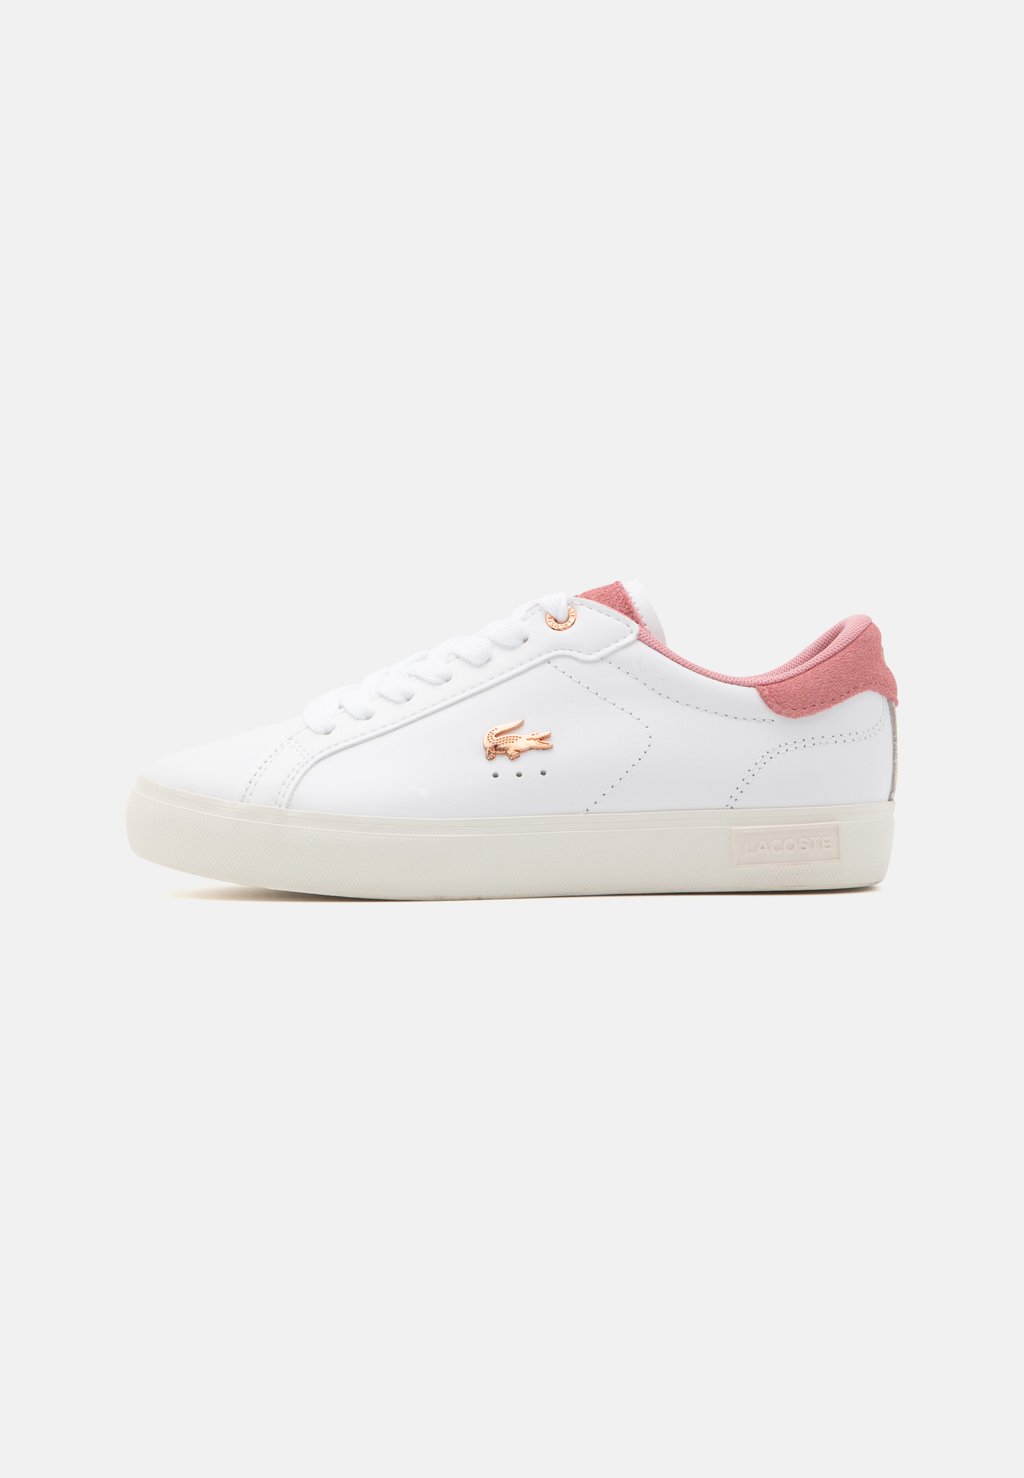 Низкие кроссовки Powercourt Lacoste, цвет white/light pink низкие кроссовки powercourt lacoste цвет white light pink